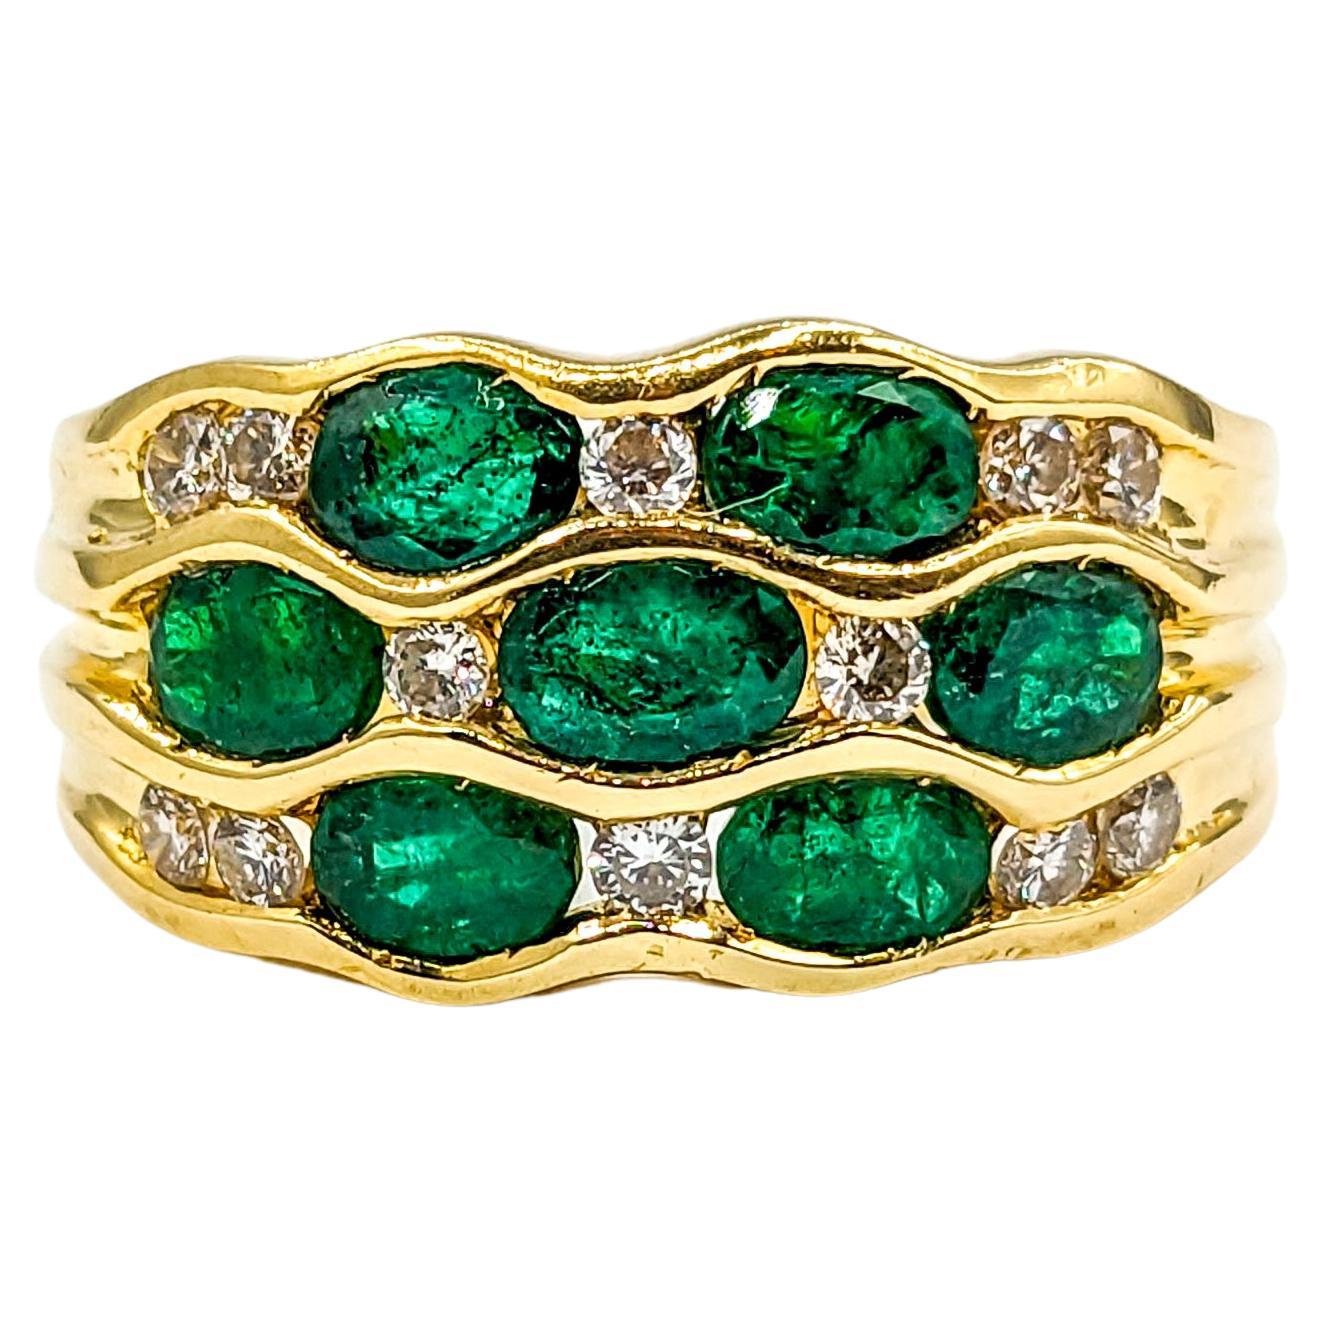 Vibrant Emerald & Diamond Band Ring in 18k Gold